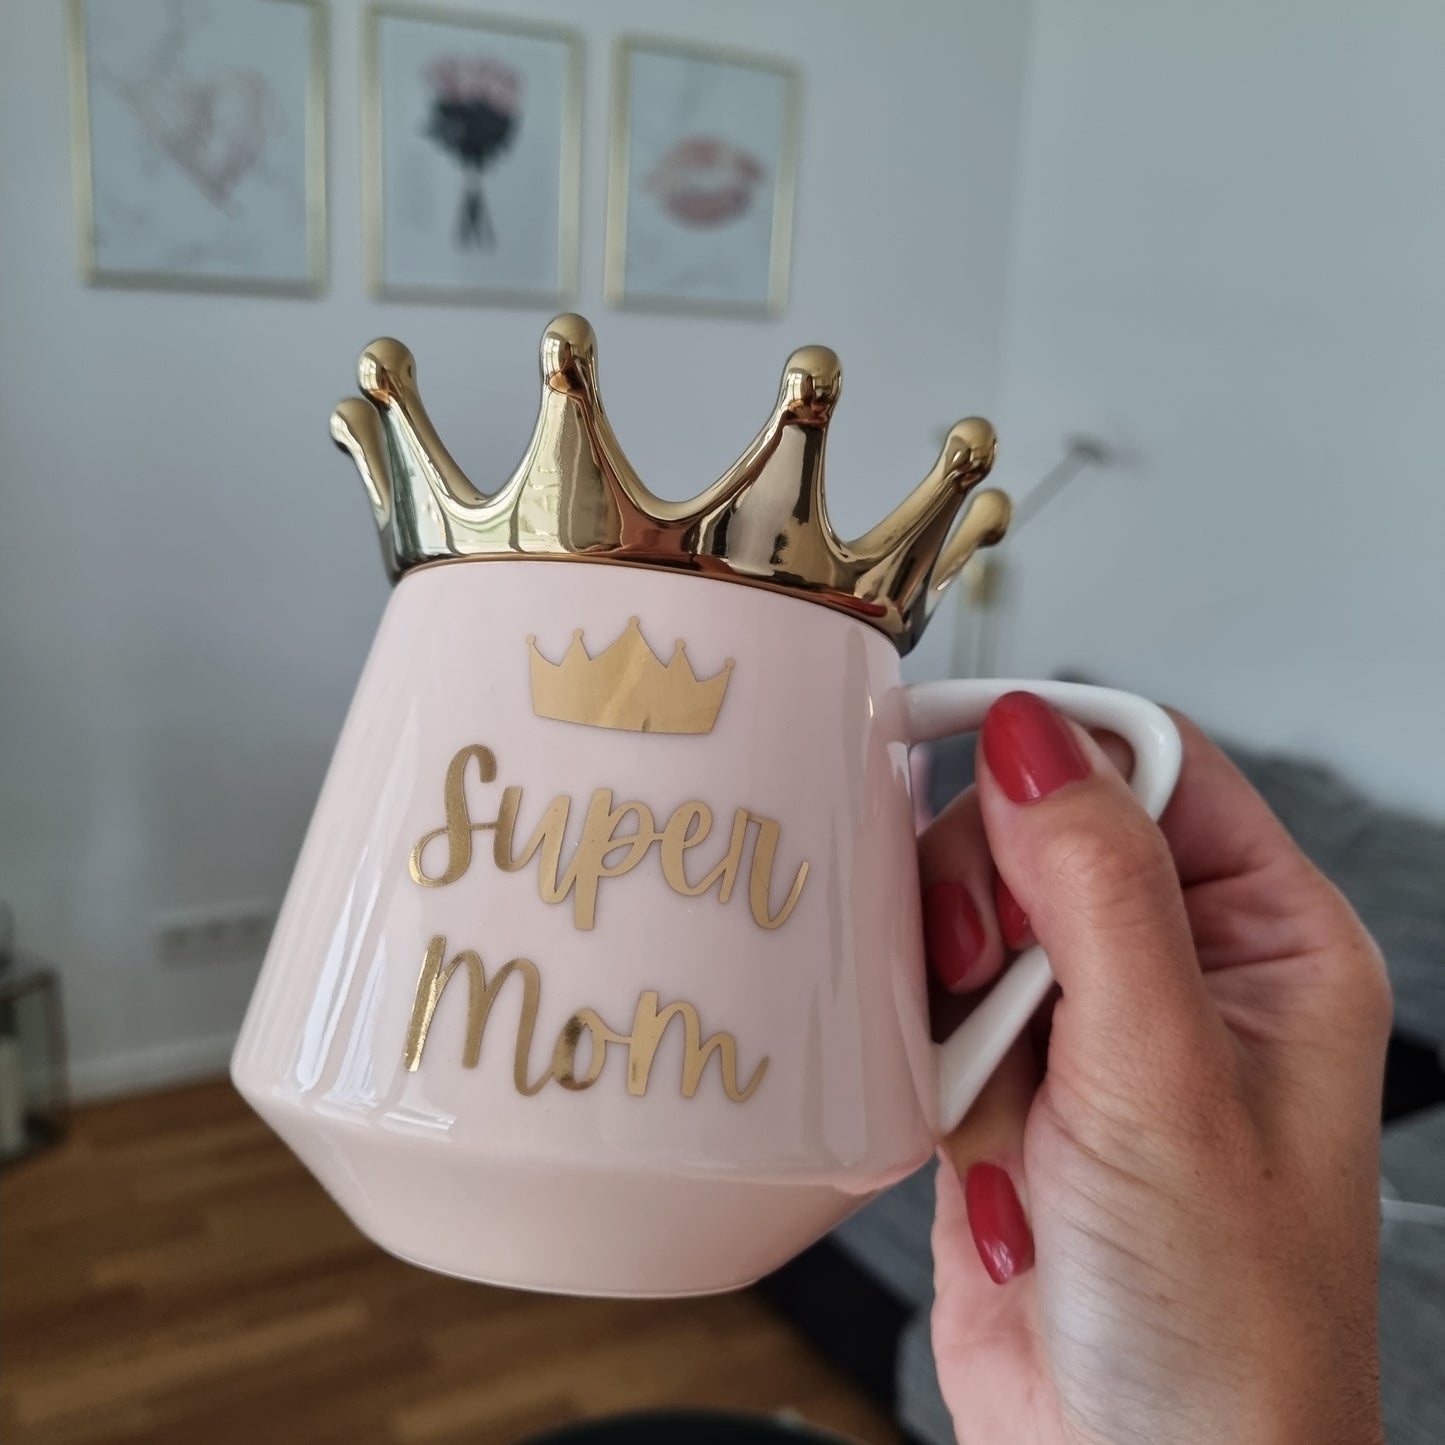 "Super Mom" mug pink with crown